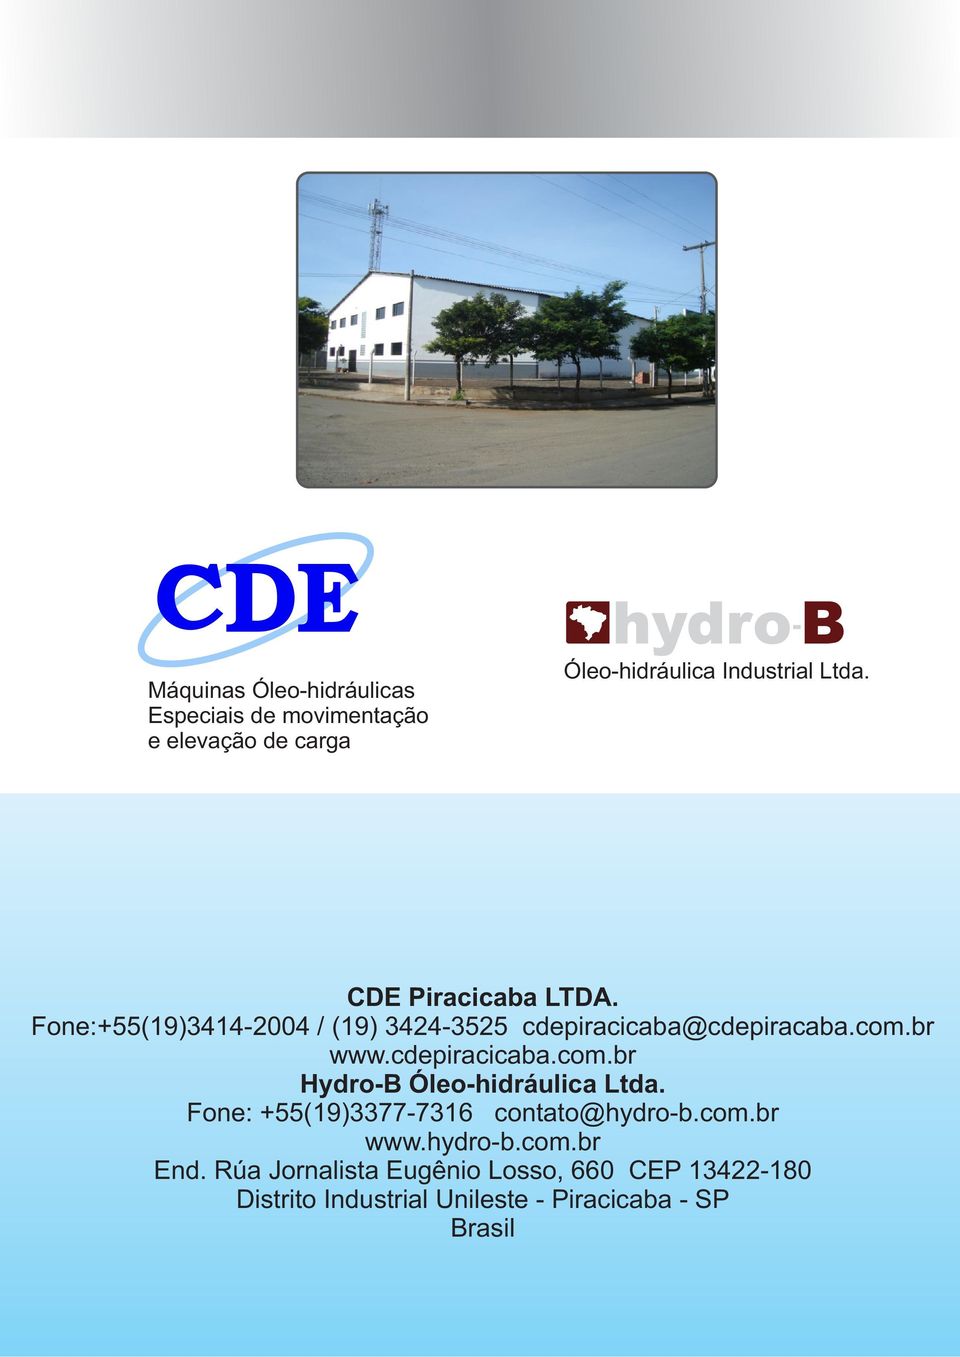 cdepiracicaba.com.br Hydro-B Óleo-hidráulica Ltda. Fone: +55(19)3377-7316 contato@hydro-b.com.br www.